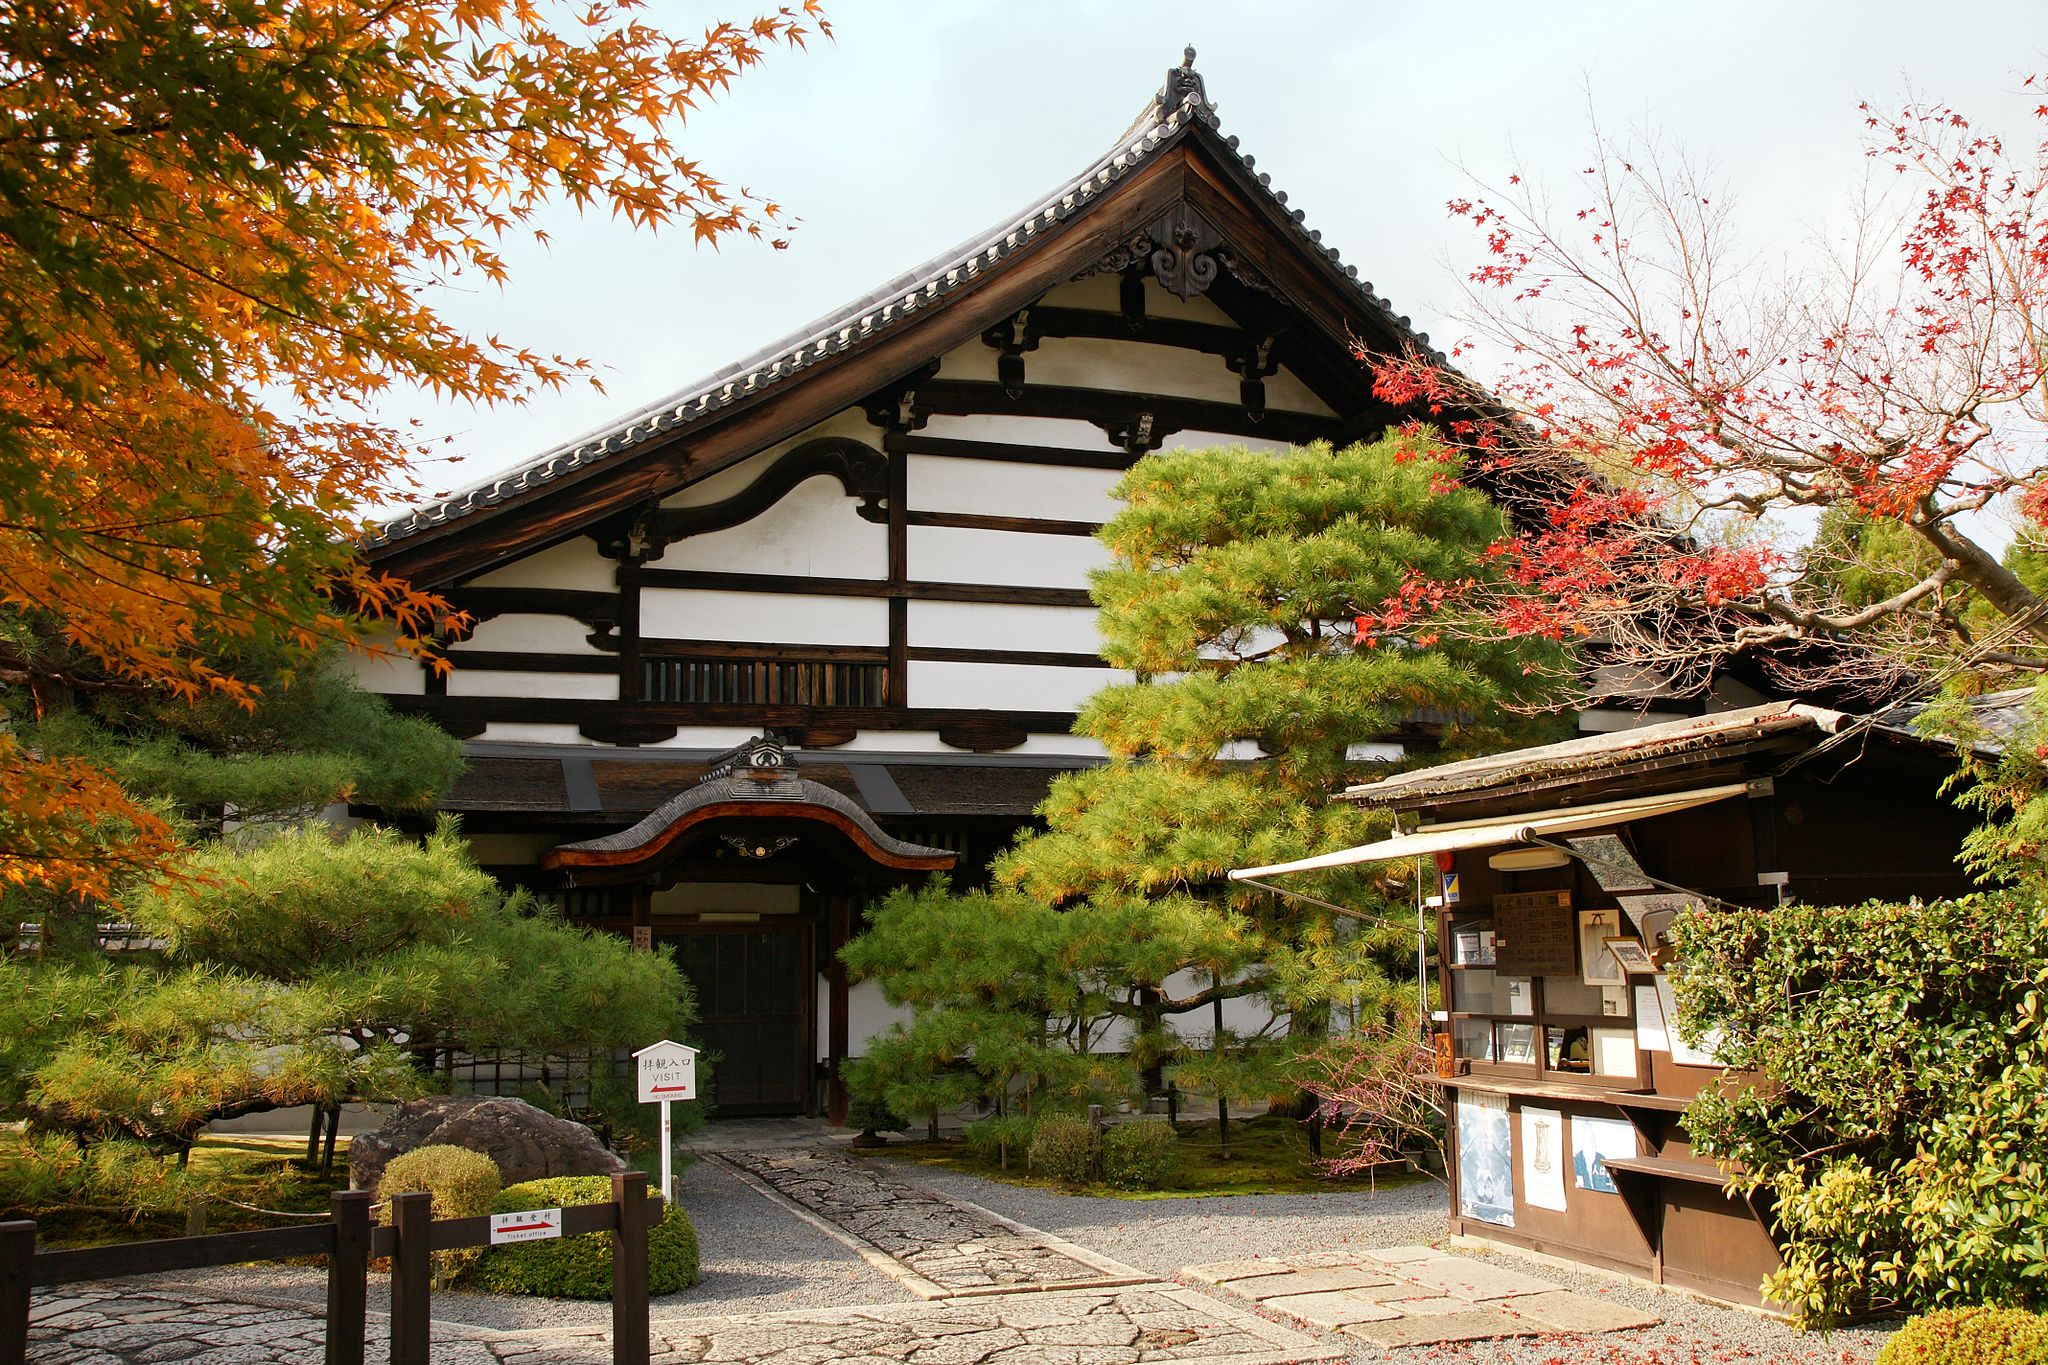 Konchi-in Temple at Nanzen-ji. Credit: 663highland. Licensed under CC BY-SA 3.0.